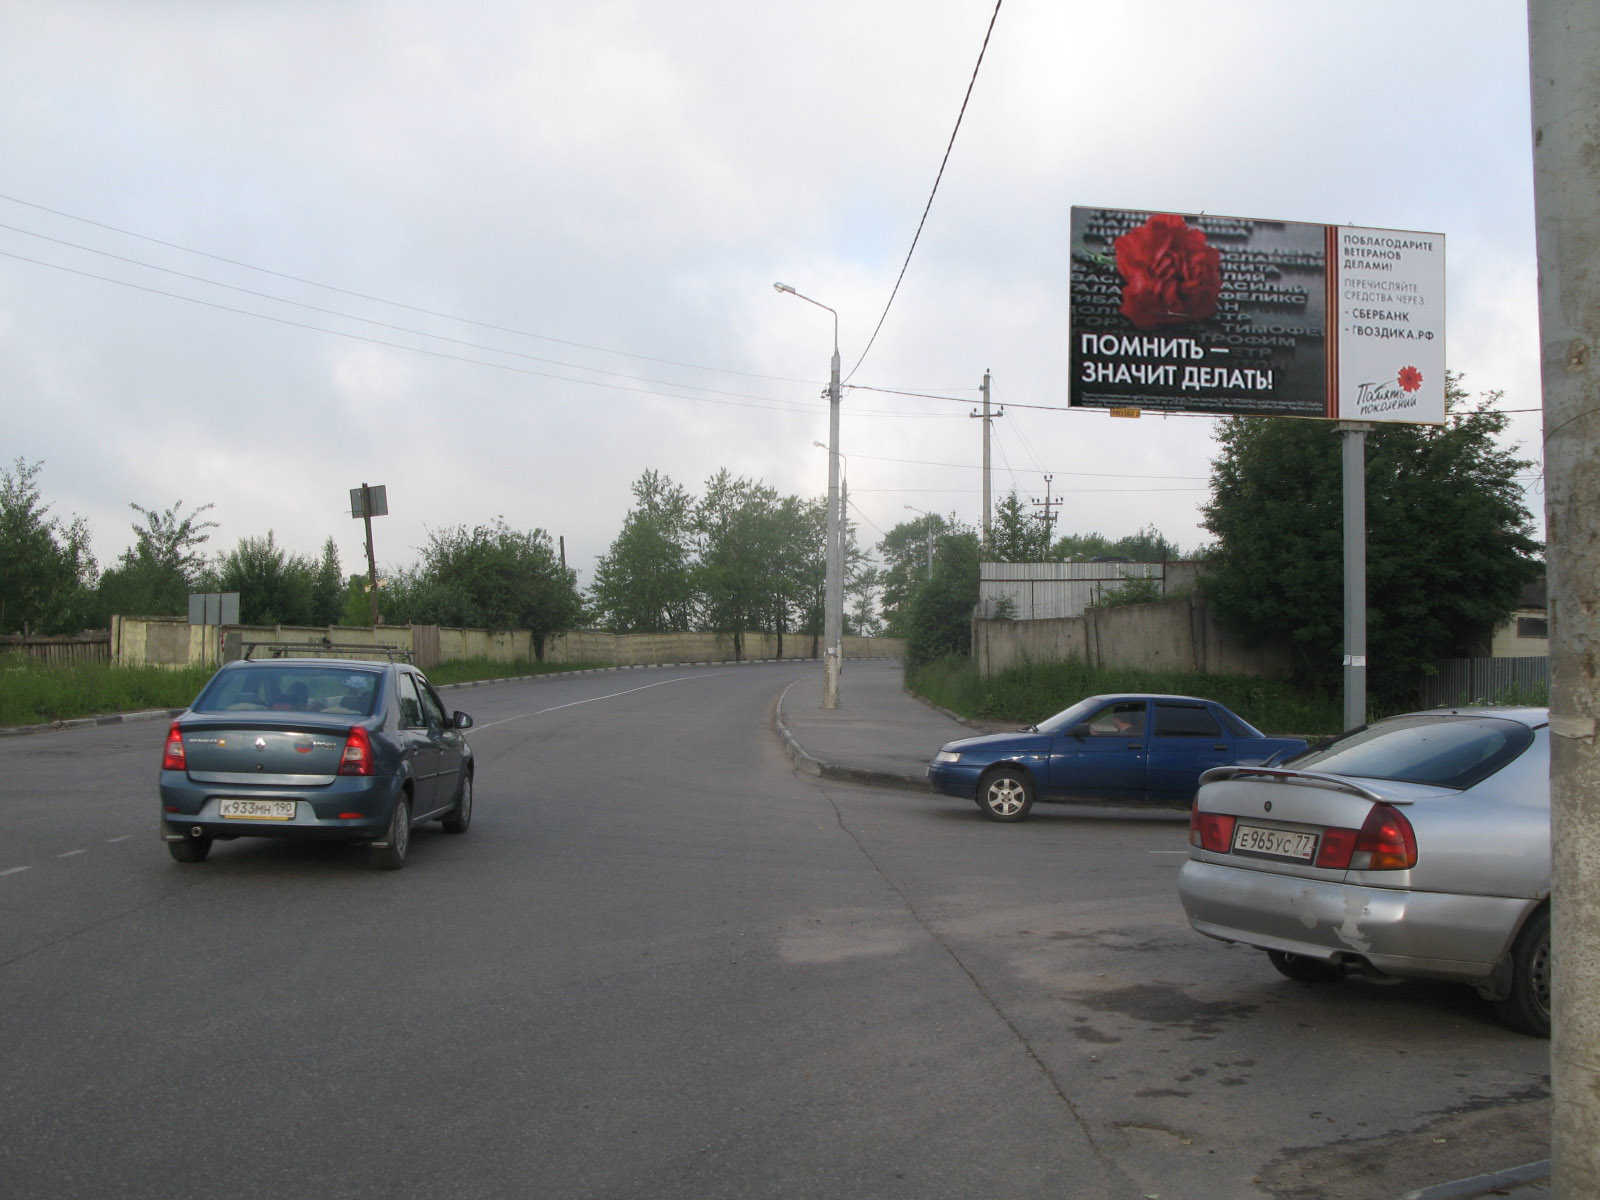 Скобяное ш., перед ул. Центральная, слева, г.Сергиев Посад